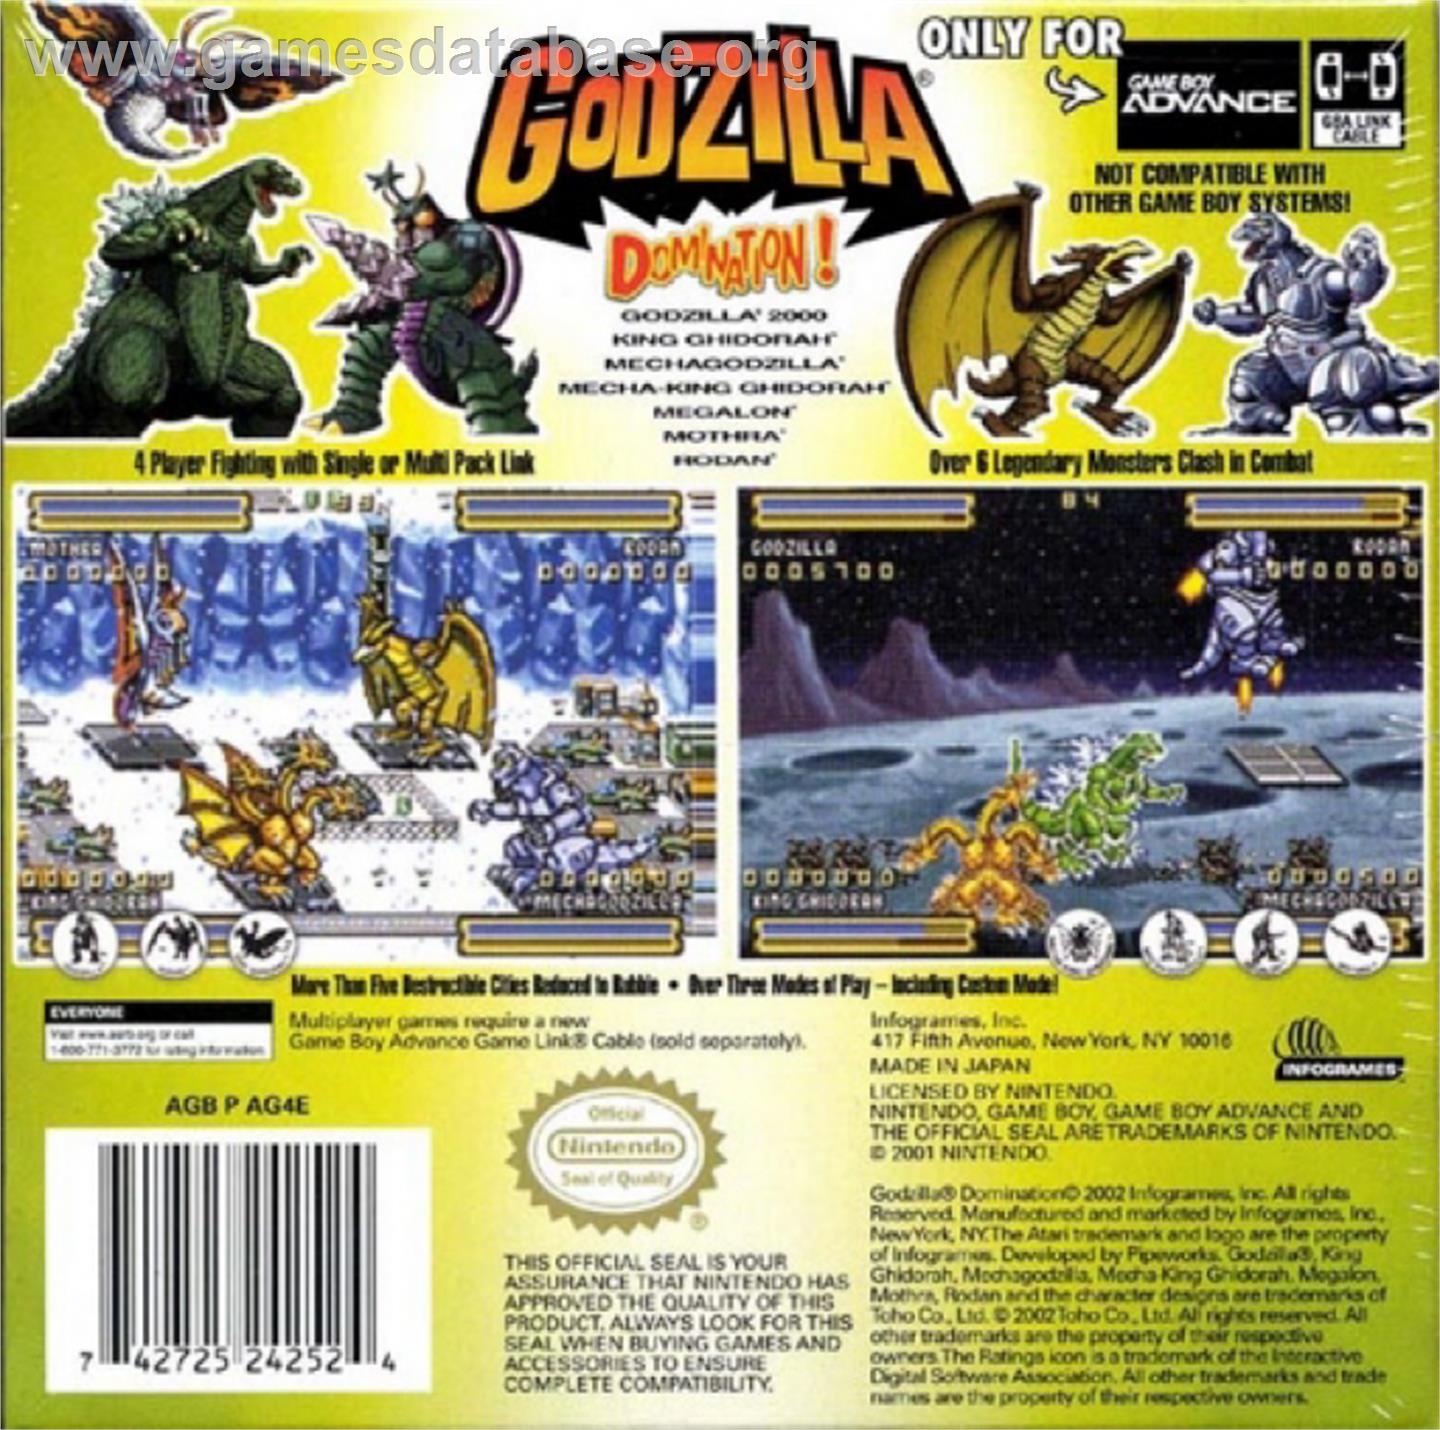 Godzilla: Domination - Nintendo Game Boy Advance - Artwork - Box Back